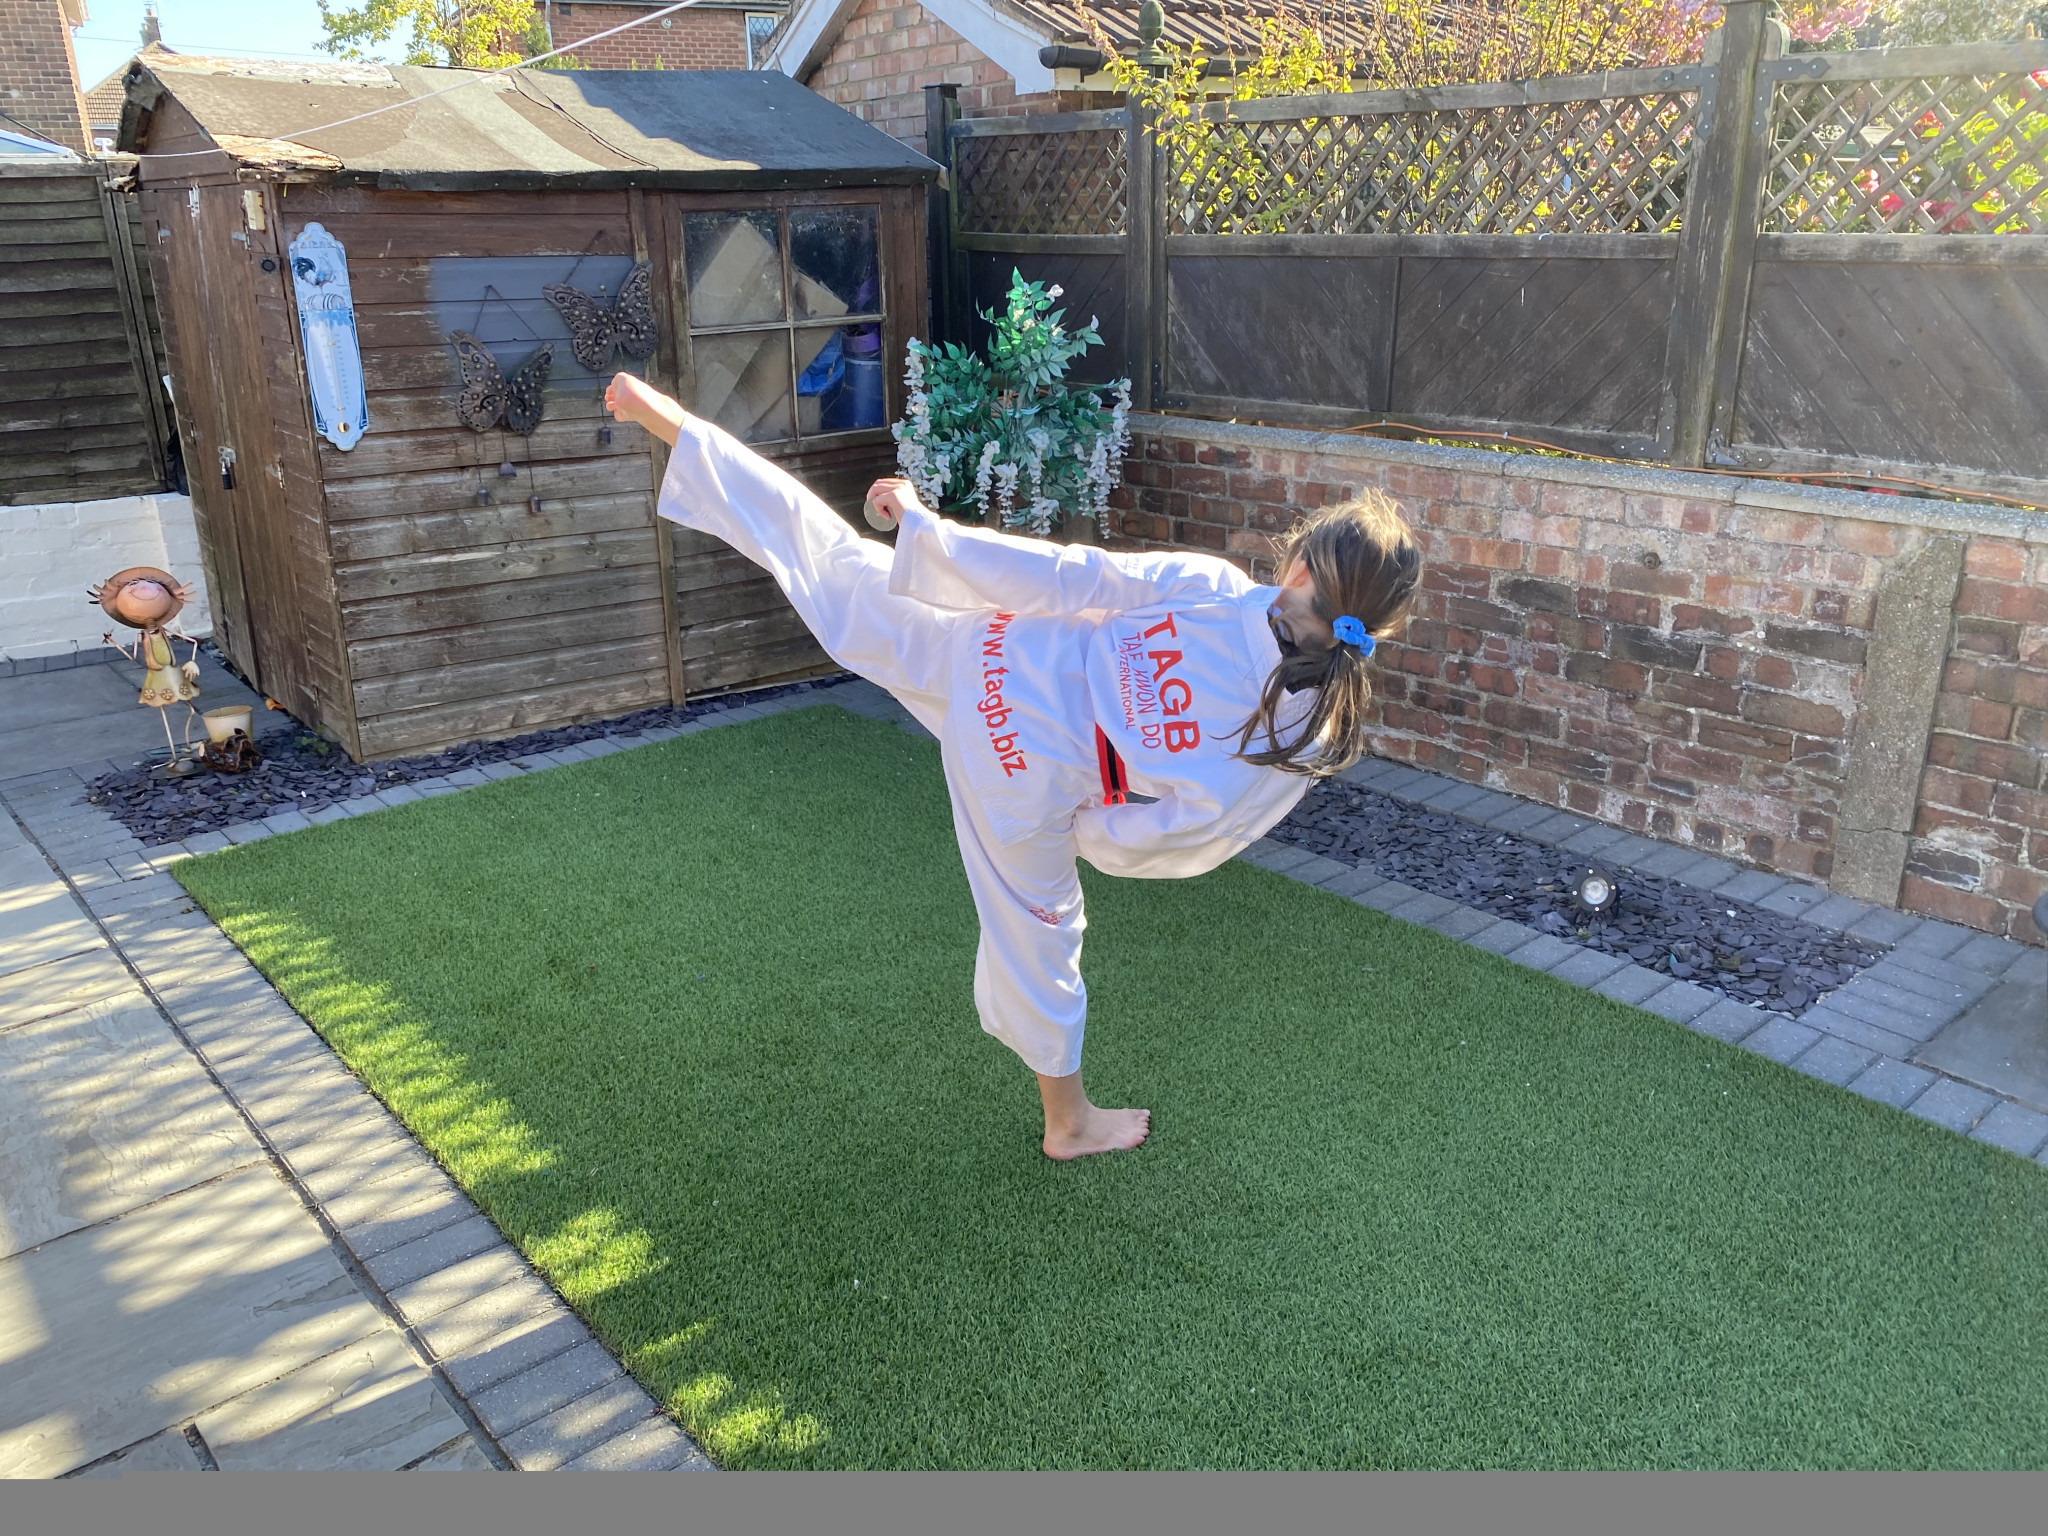 Eleven-year-old taekwondo world champion raises money for NHS by doing kicks across her garden